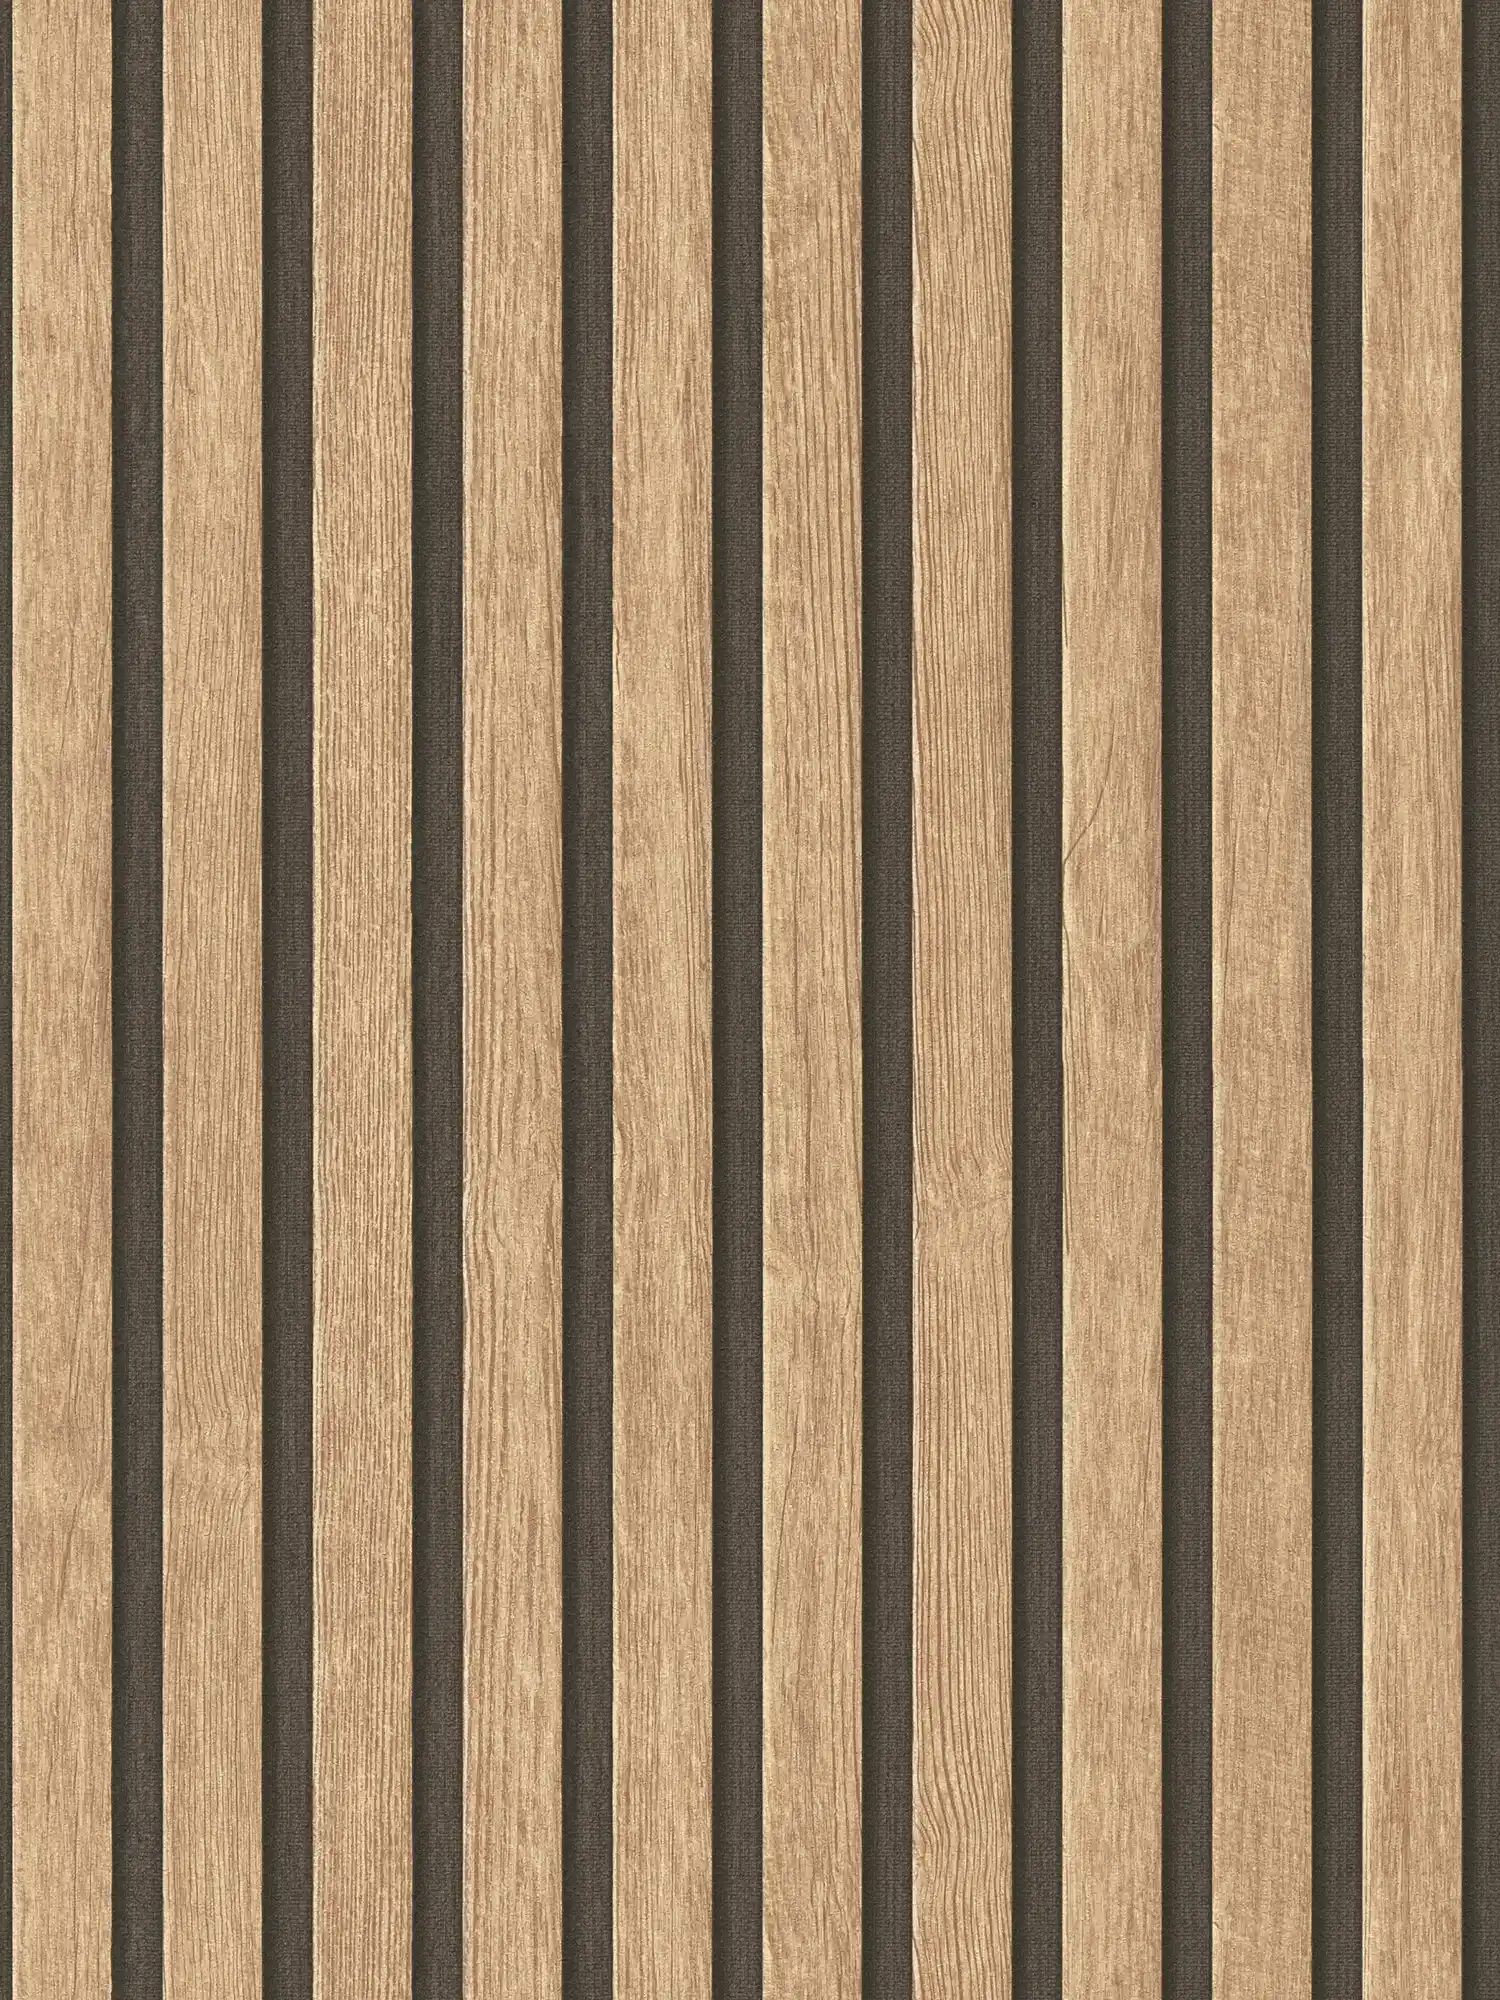         Wallpaper wood look with panel pattern - beige, brown
    